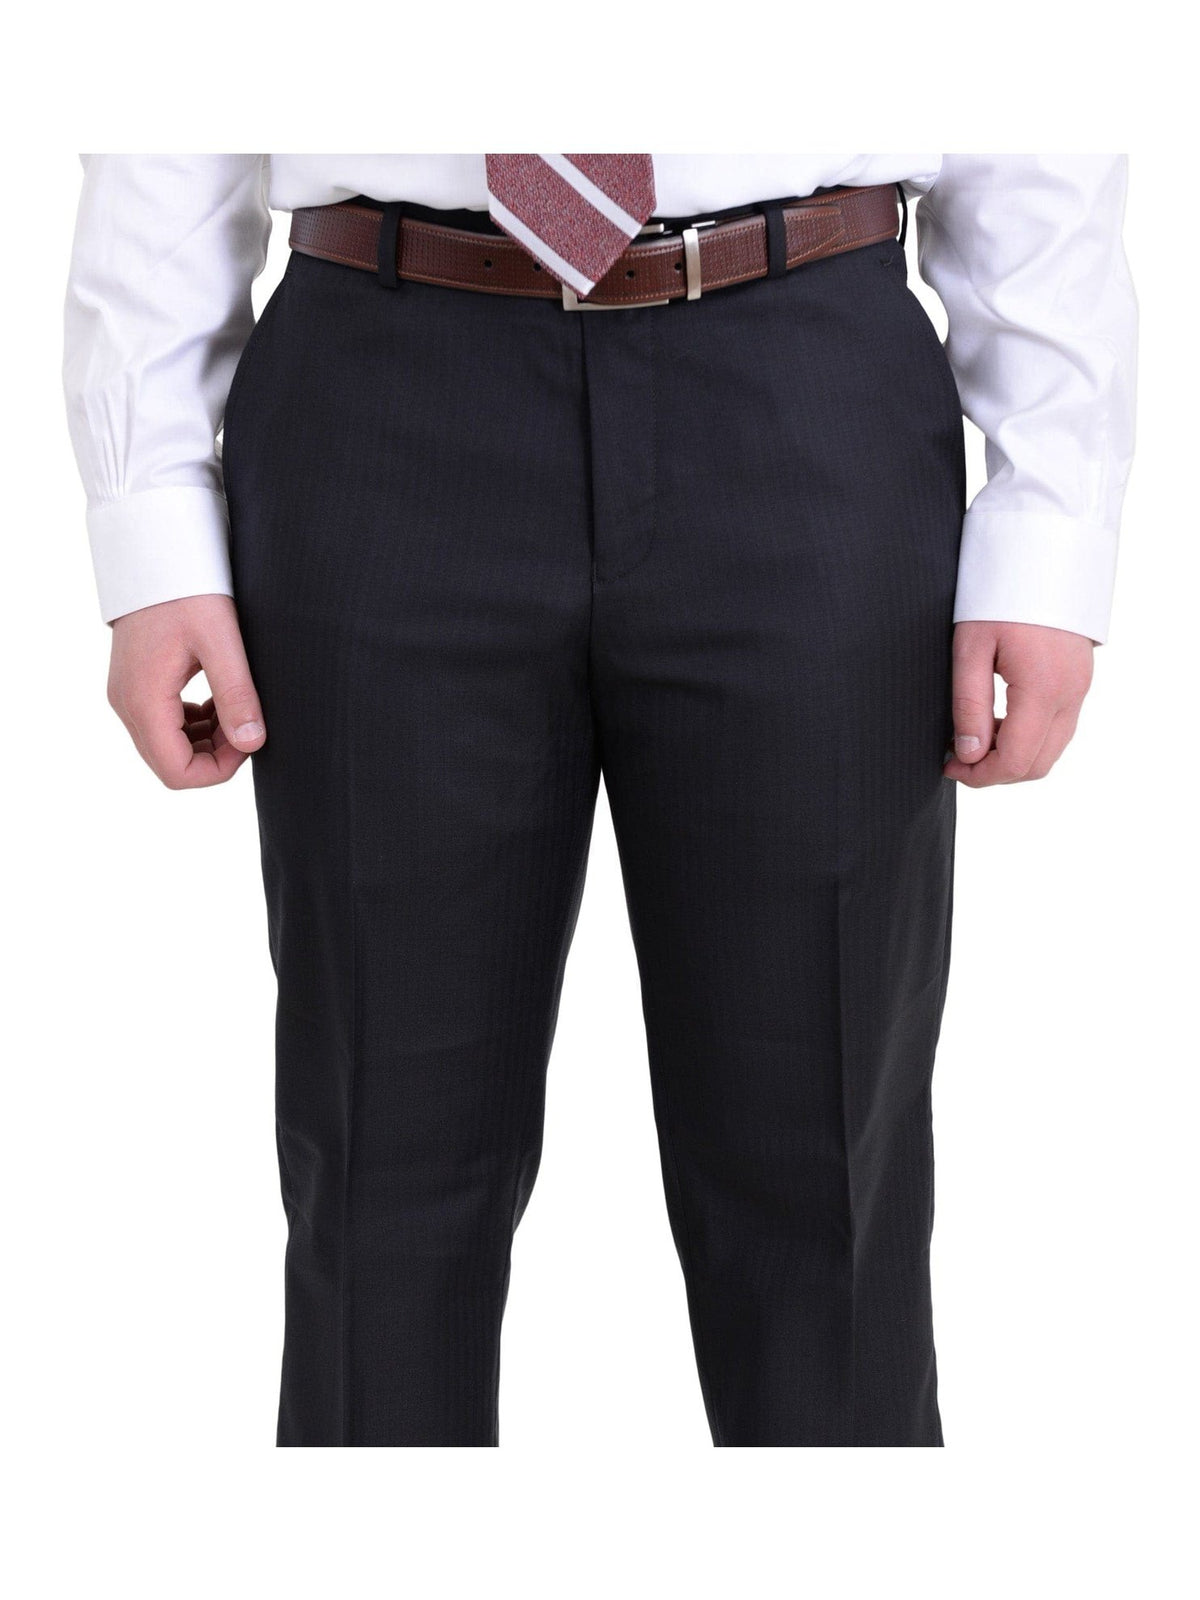 Raphael TWO PIECE SUITS Raphael Classic Fit Black Tonal Striped Two Button Wool Suit